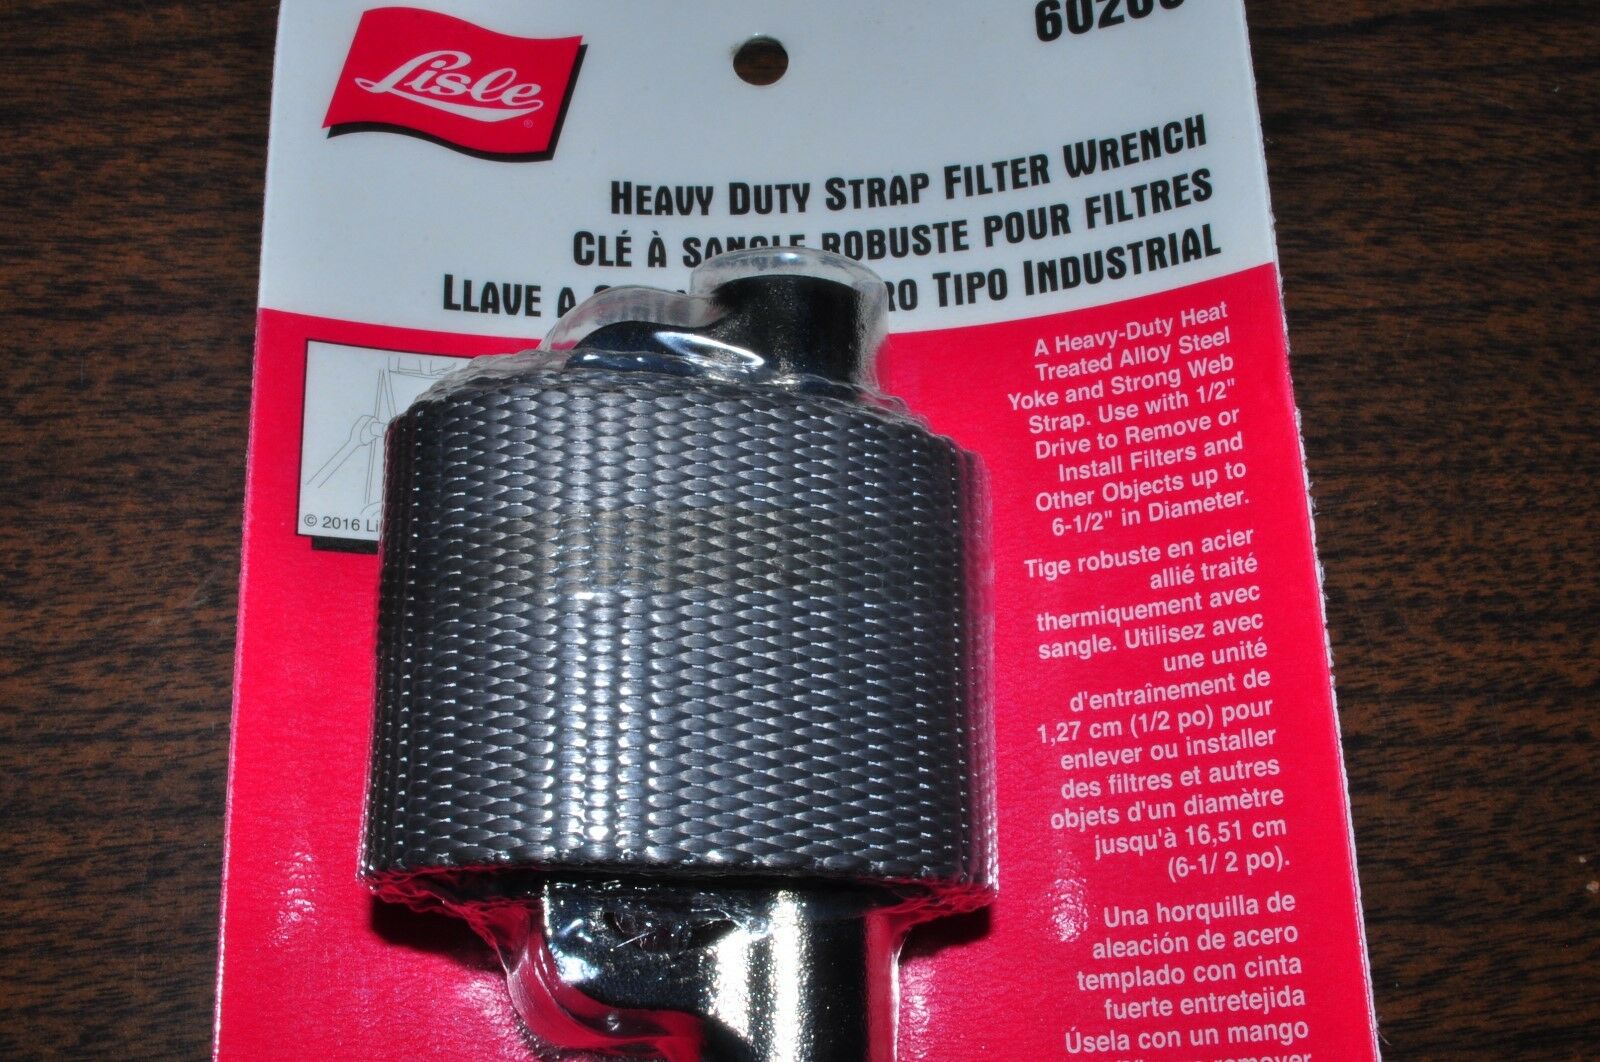 Lisle 60200 Heavy Duty Strap Filter Wrench